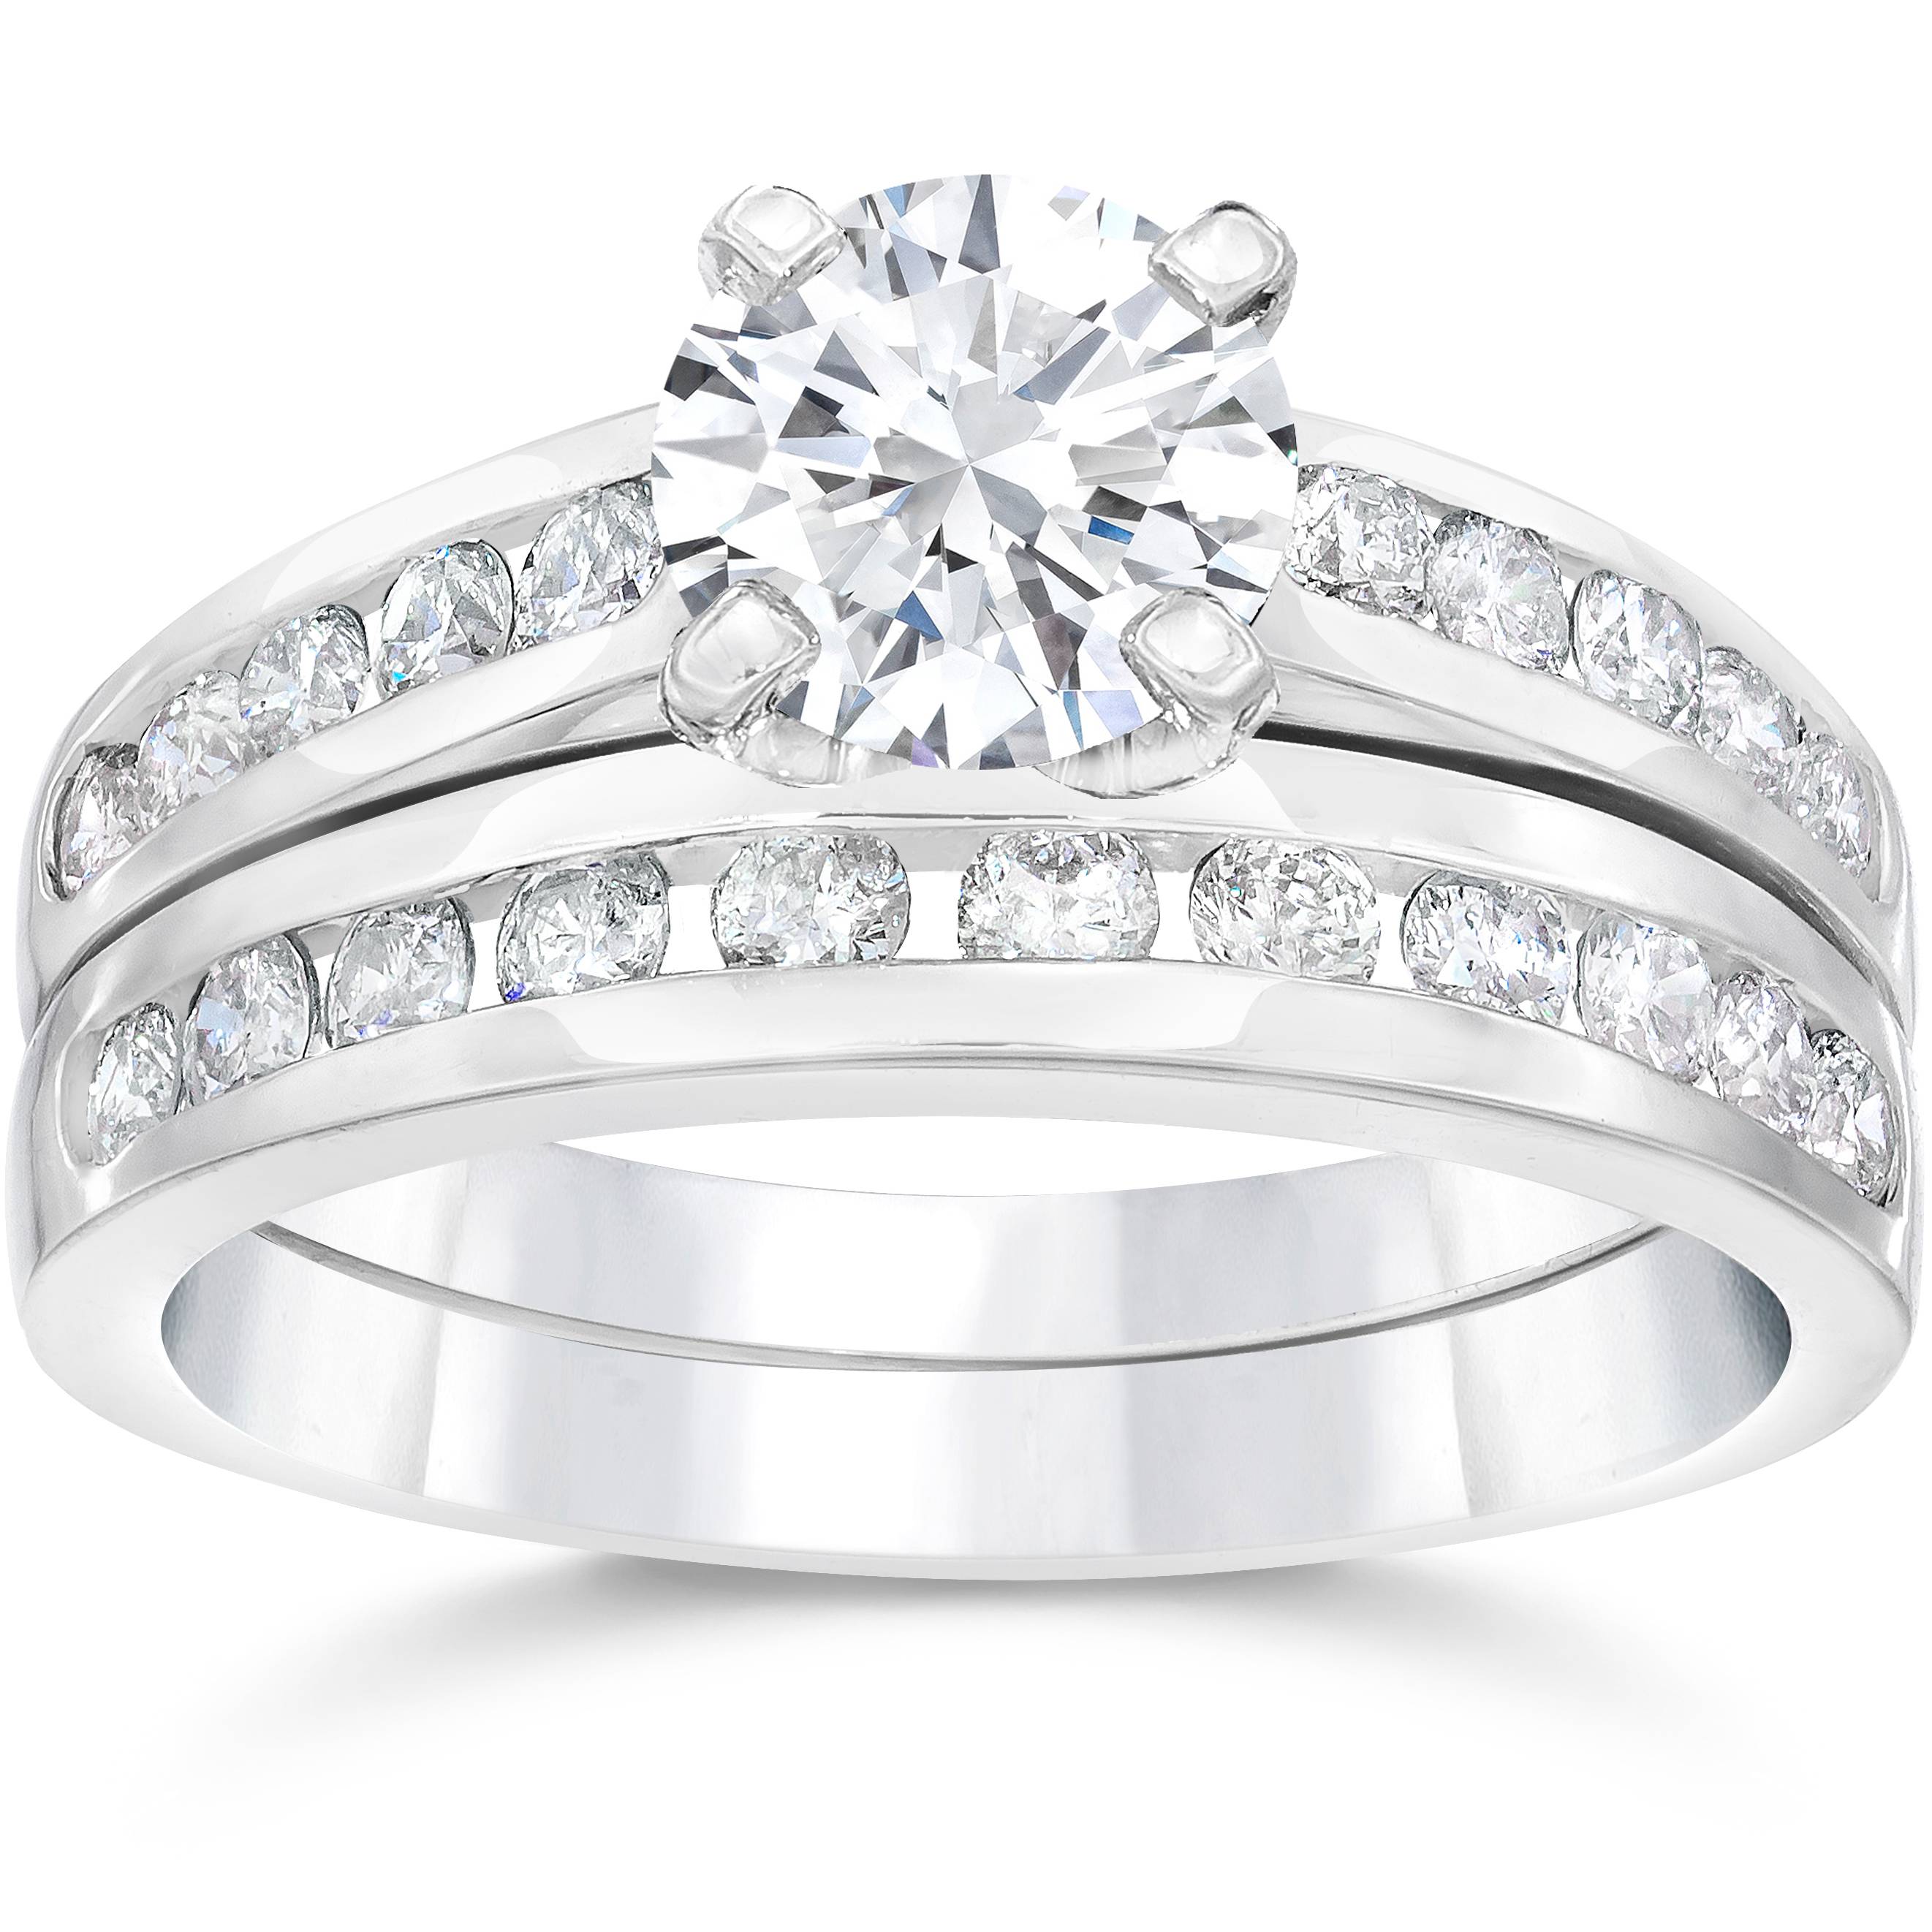 Pompeii3 2 Carat Diamond Solitaire Engagement Ring Matching Wedding Band White Gold 14kt